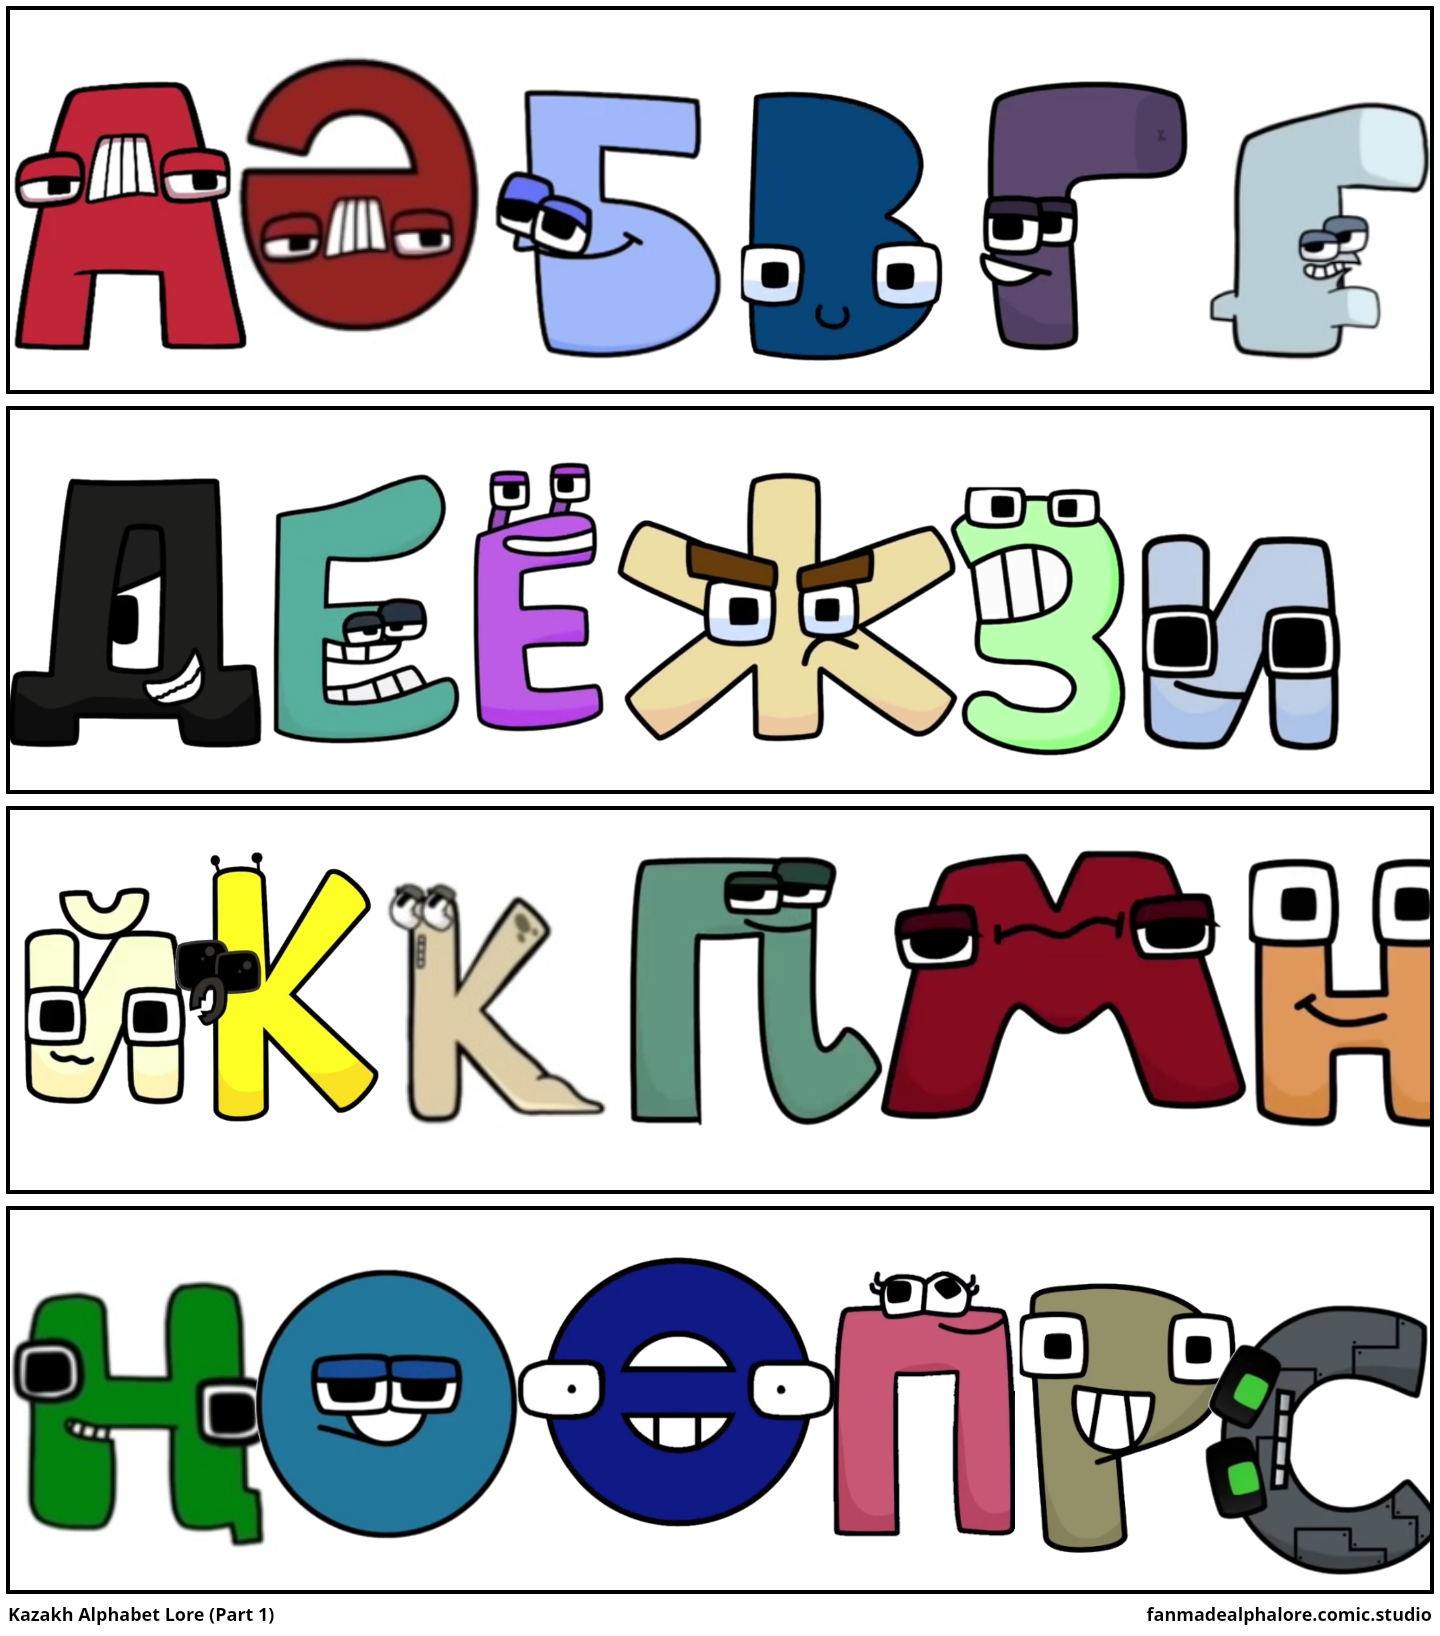 Kazakh Alphabet lore part 1 - Comic Studio